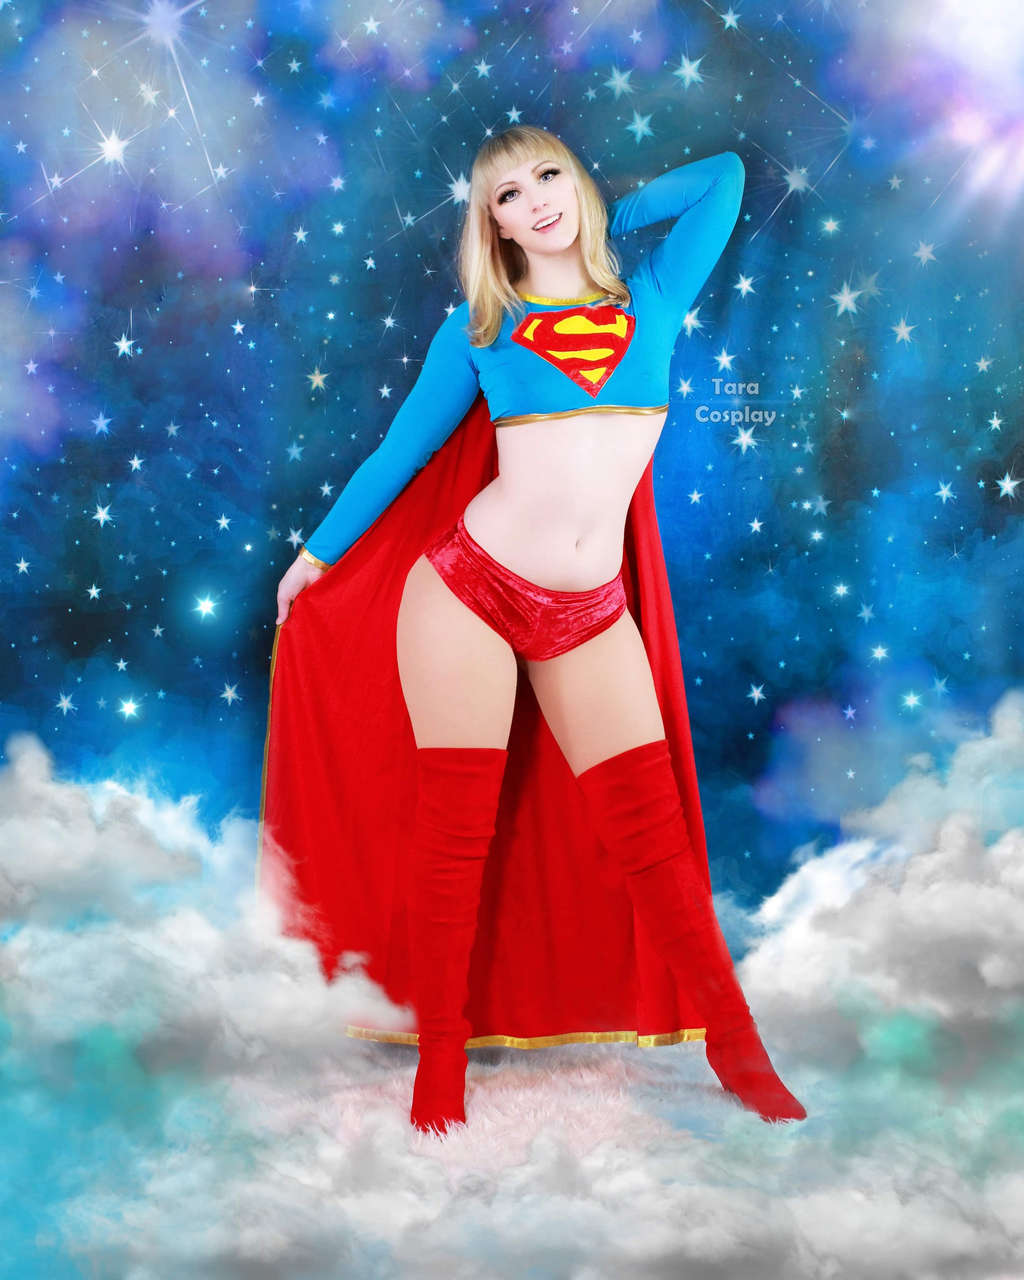 Supergirl By Tara Cospla